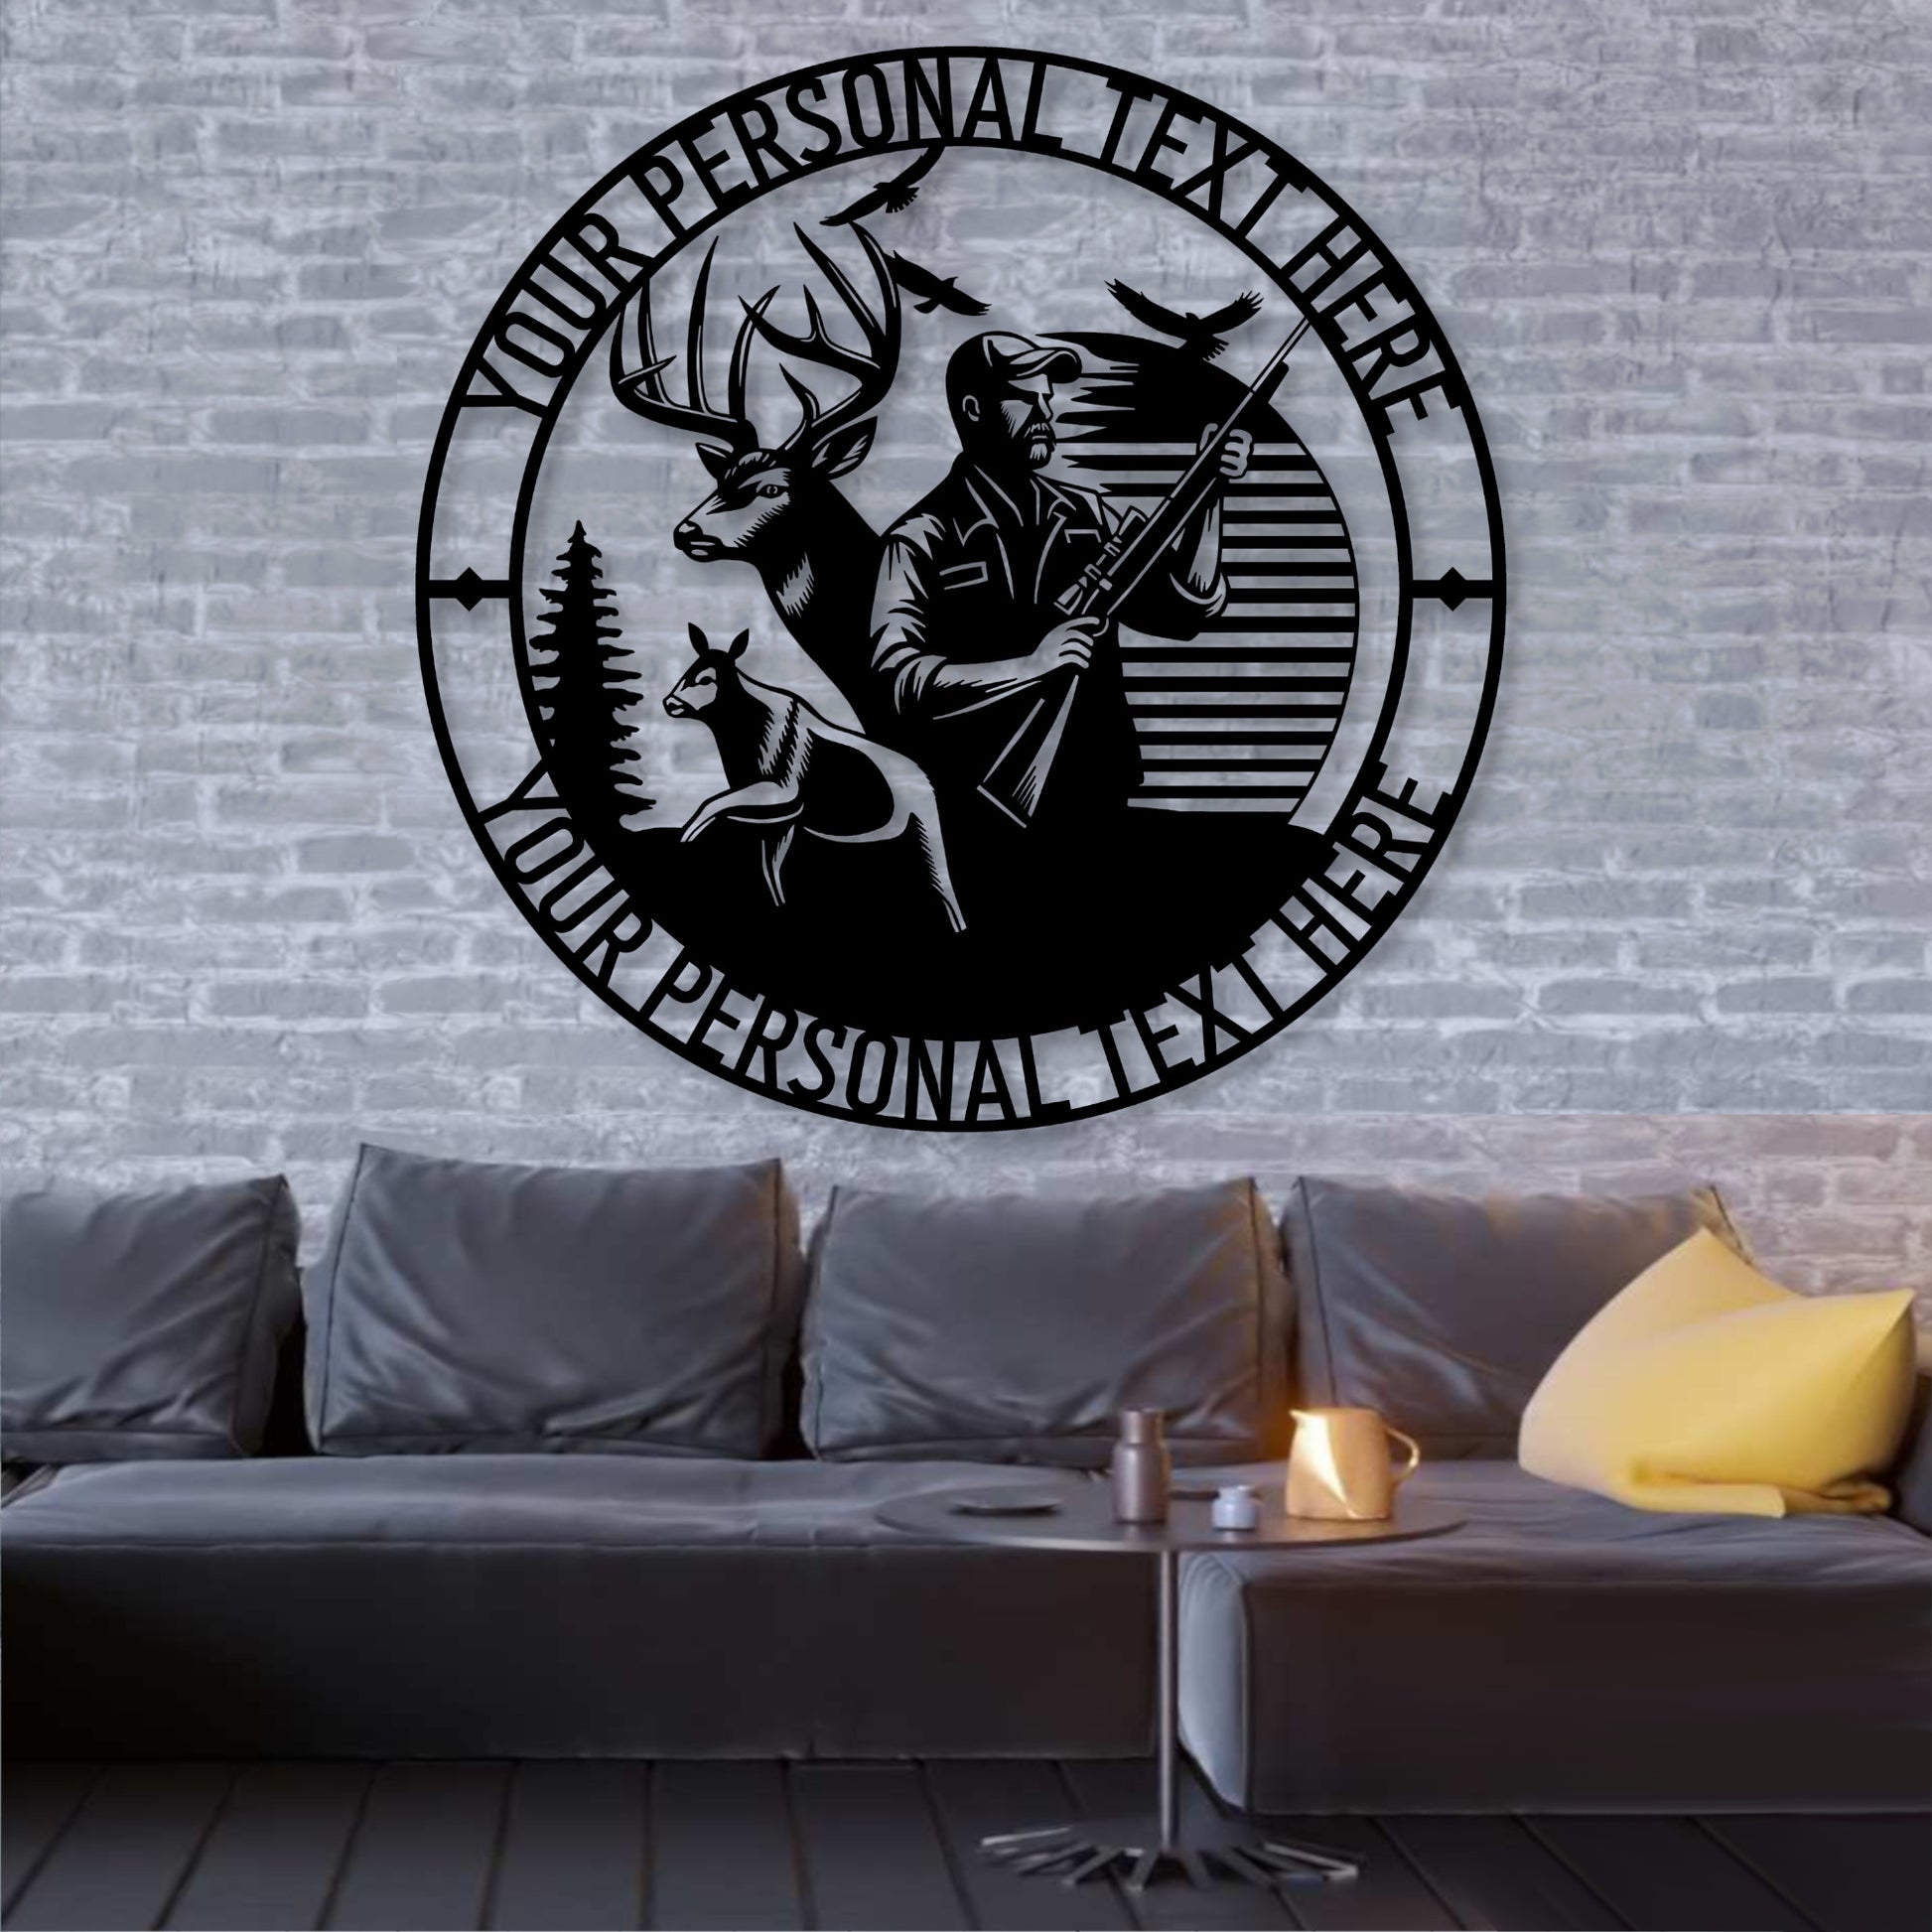 Personalized Deer Hunter Name Metal Sign. Custom Hunting Wall Decor. Huntsman Wall Hanging. Cabin Decoration Gift. Personal Lodge Decor Gift